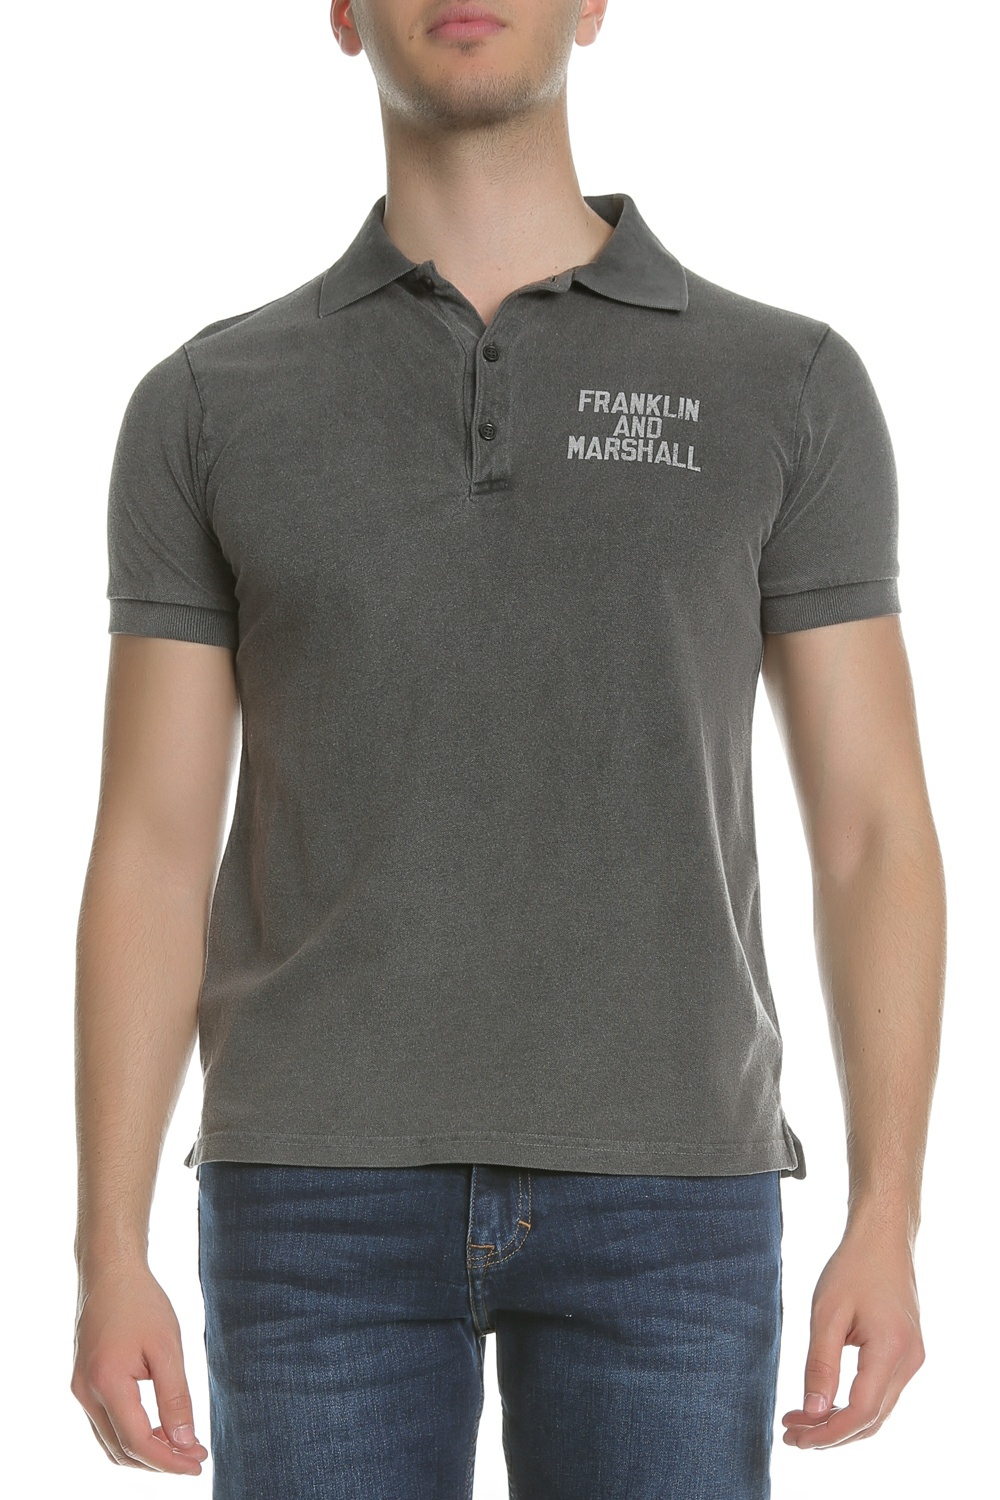 FRANKLIN & MARSHALL FRANKLIN & MARSHALL - Ανδρική πόλο μπλούζα FRANKLIN & MARSHALL ανθρακί